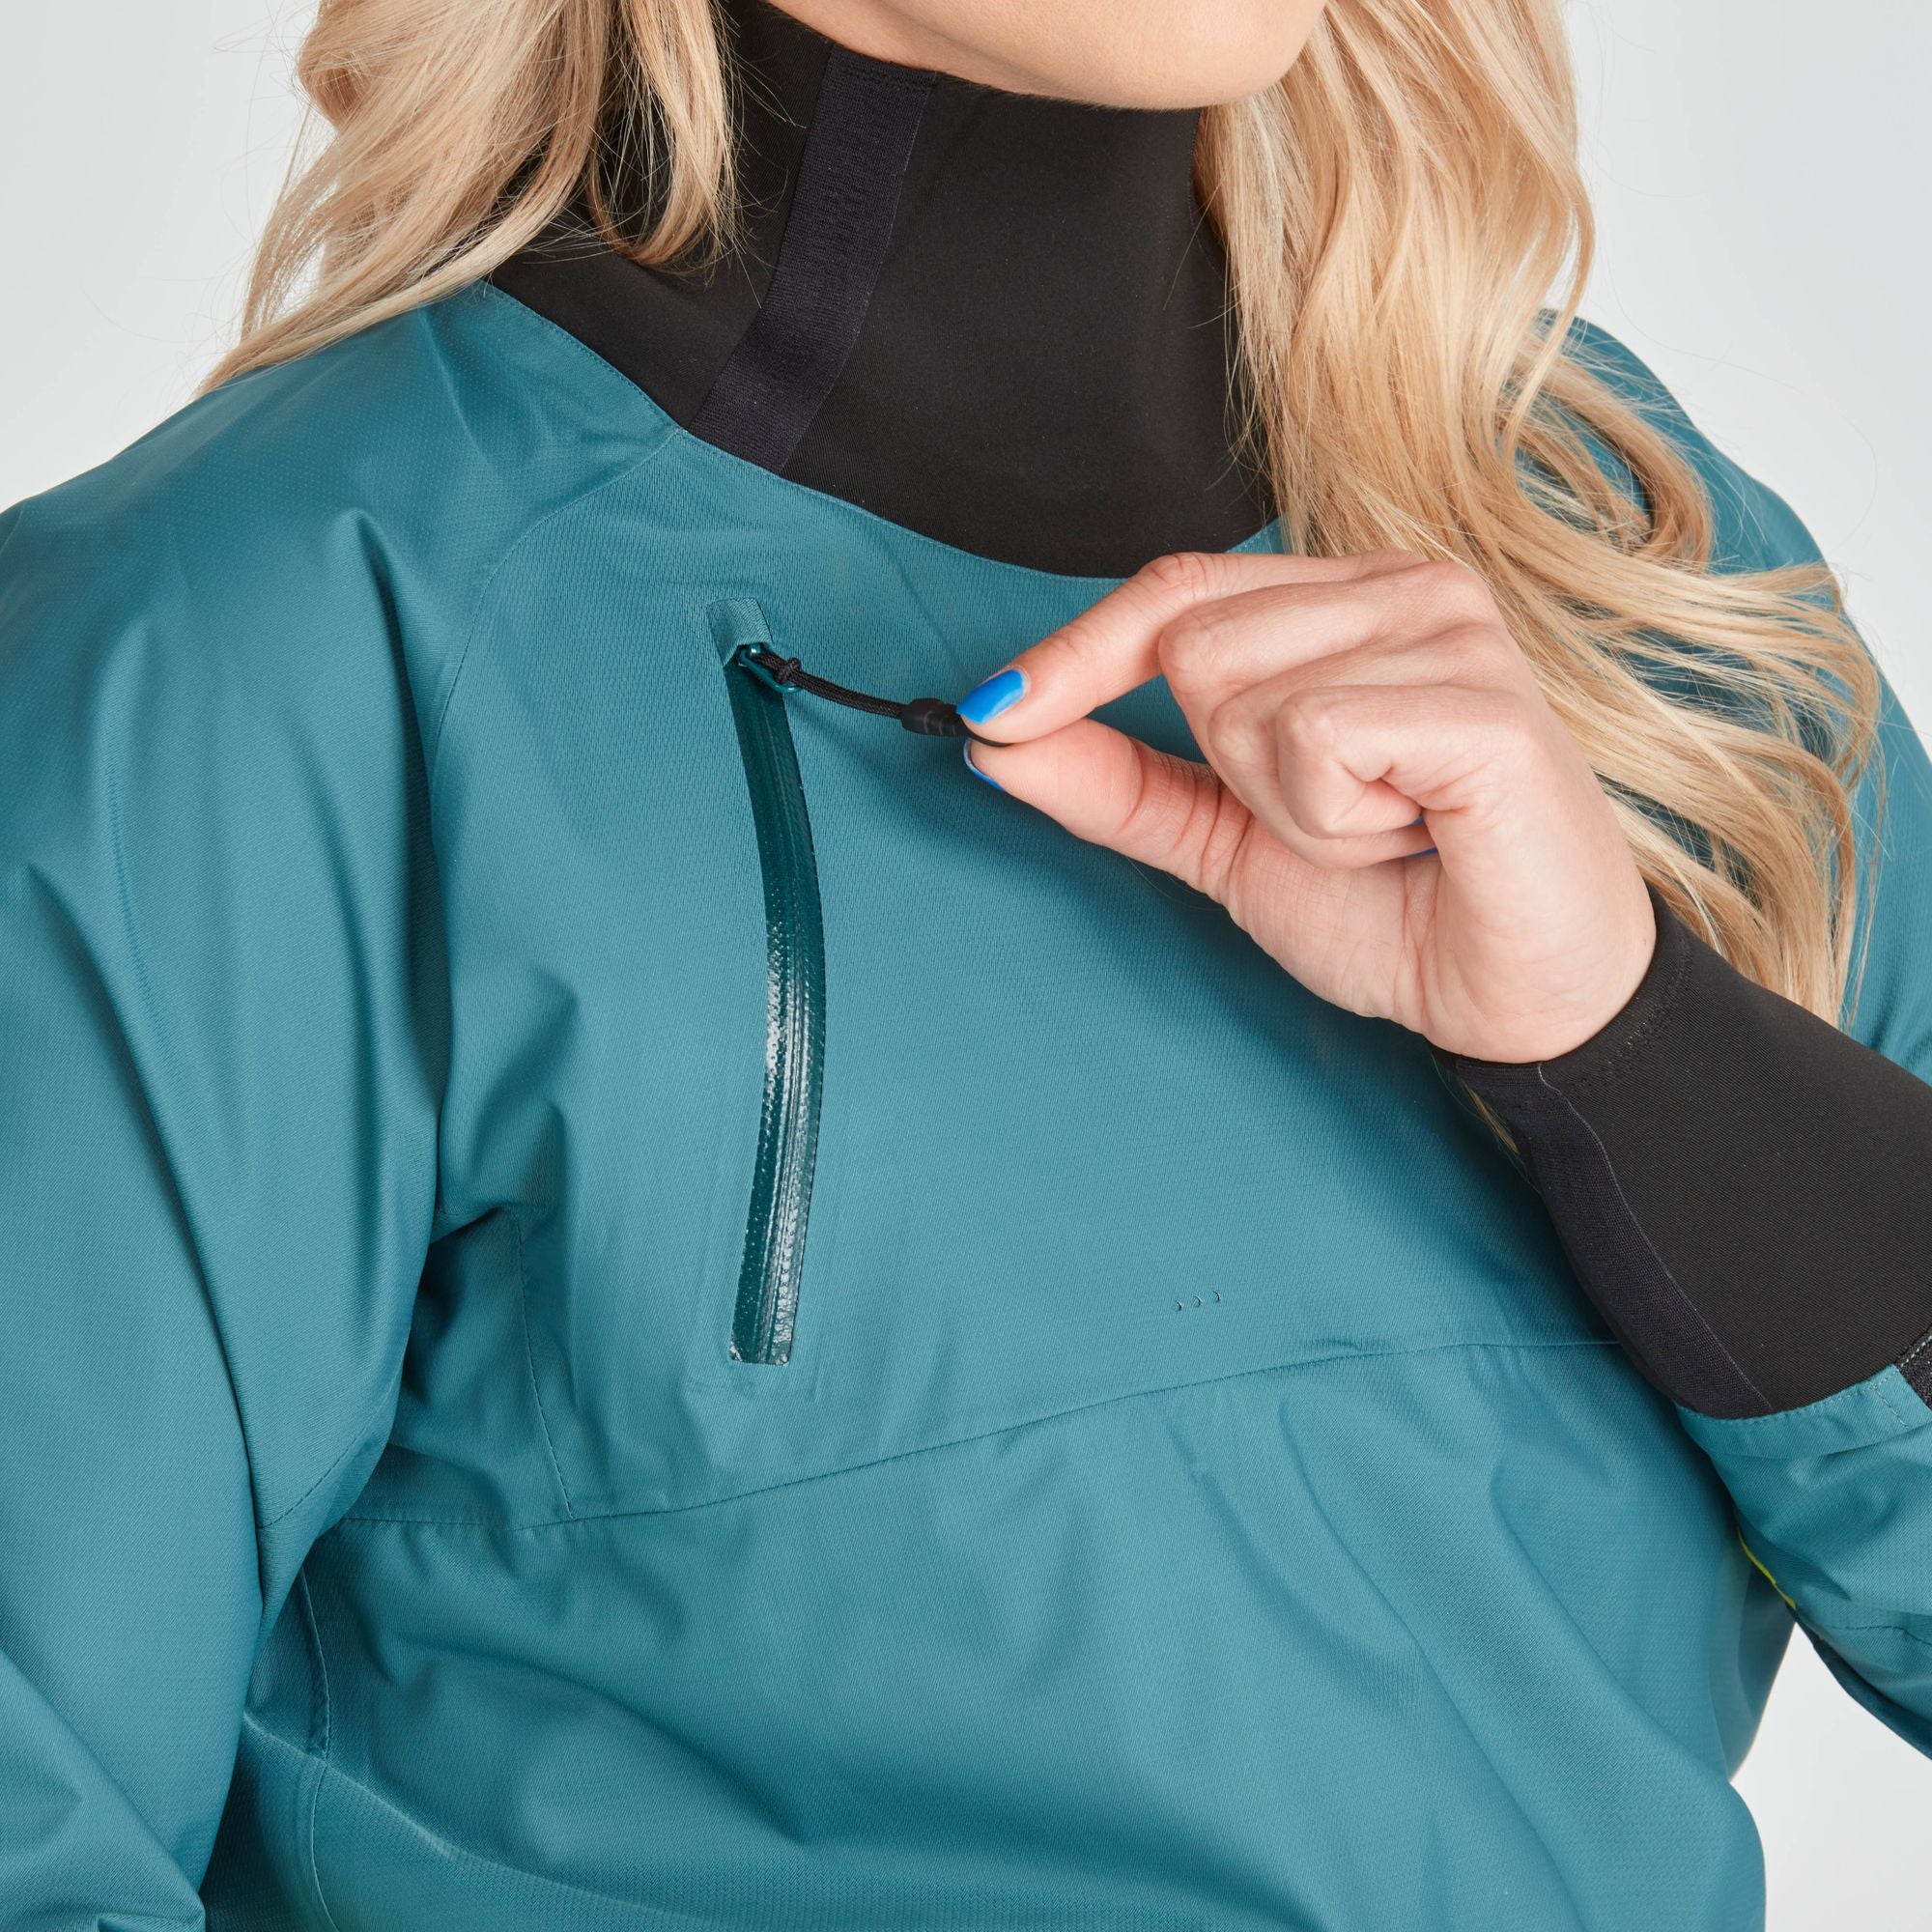 NRS - Women's Stratos Paddling Jacket